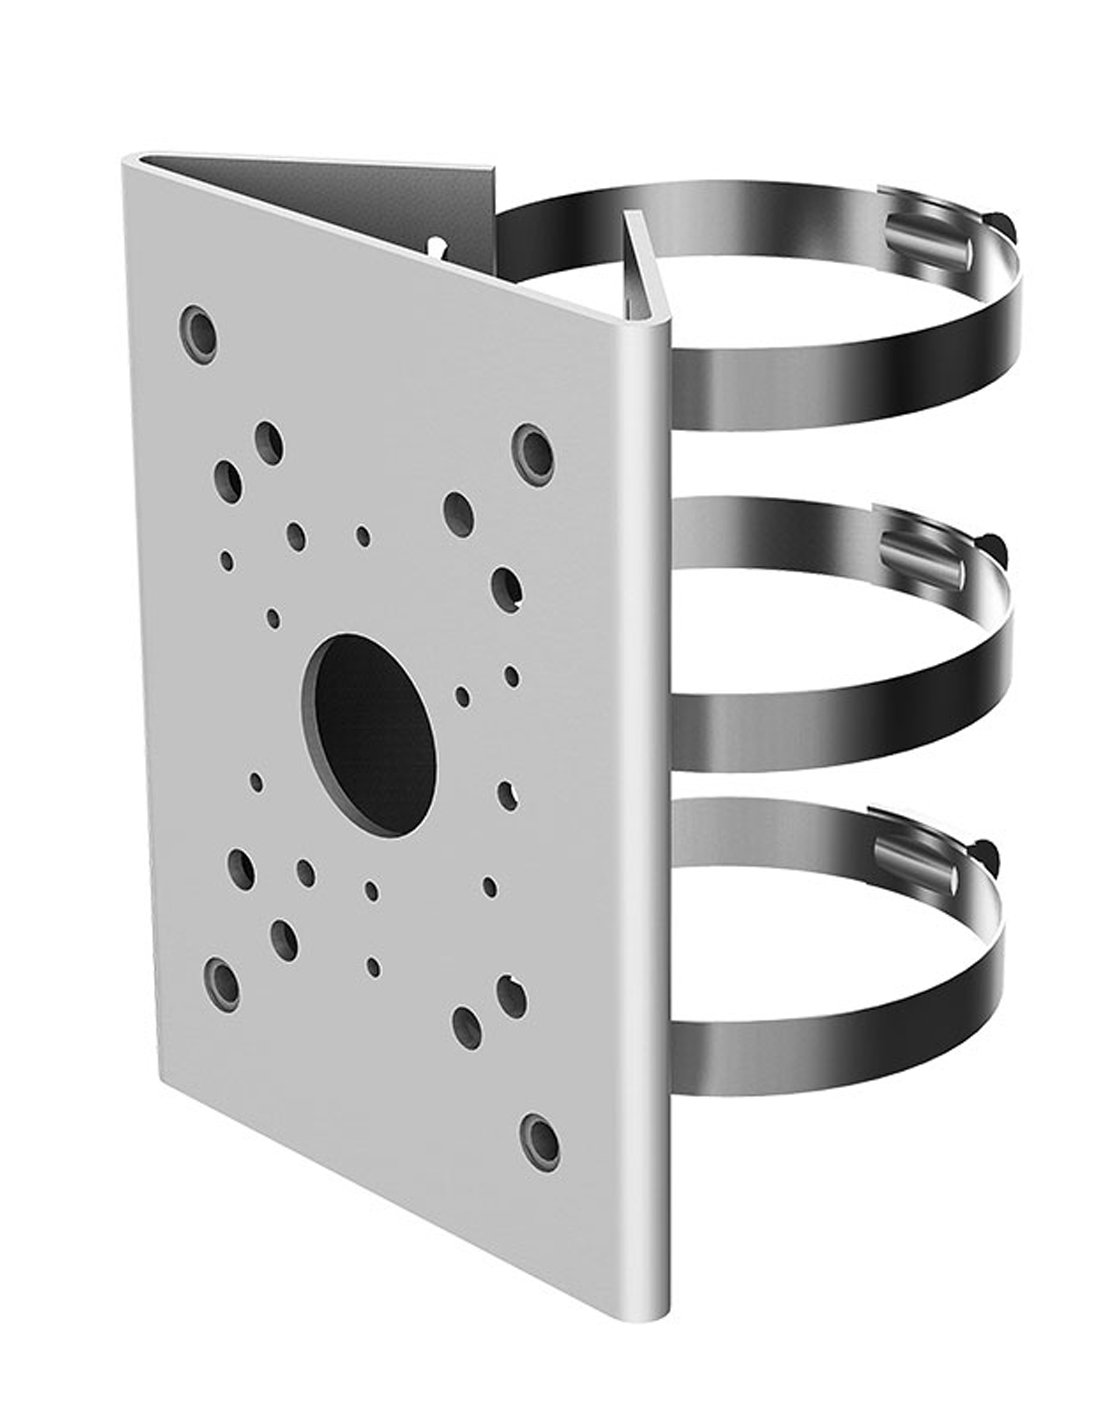 VSBKTA150-triple-clamp-pole-mount-camera-bracket-description.jpg